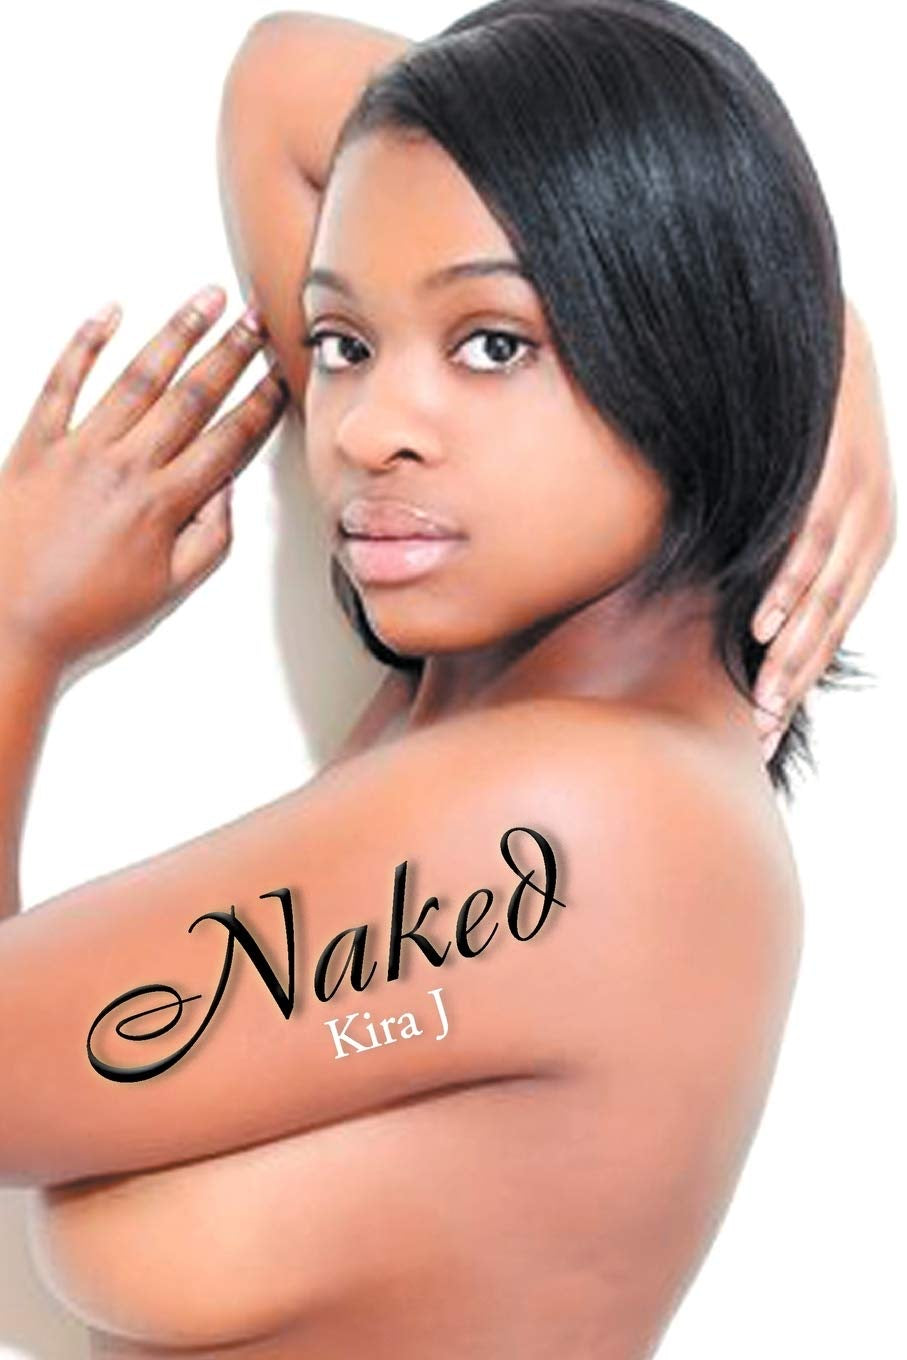 “Naked”